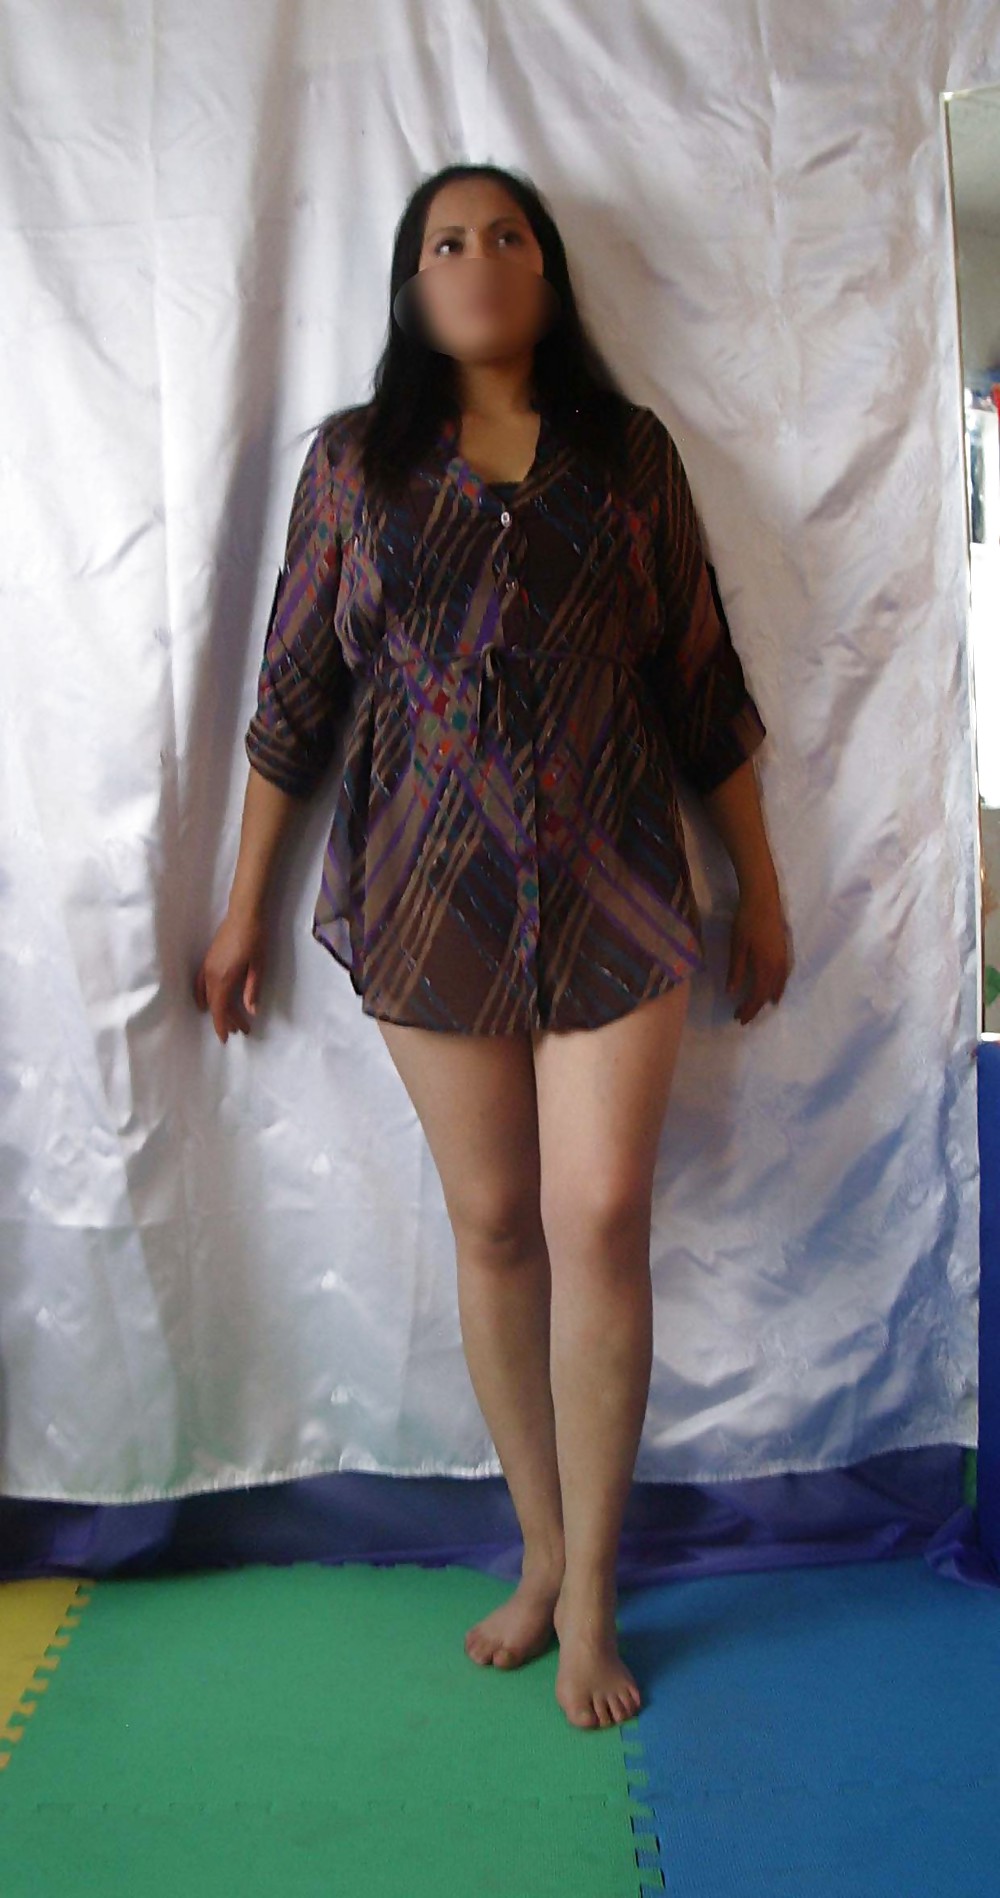 Amateur latina models her bra and panty #24599313